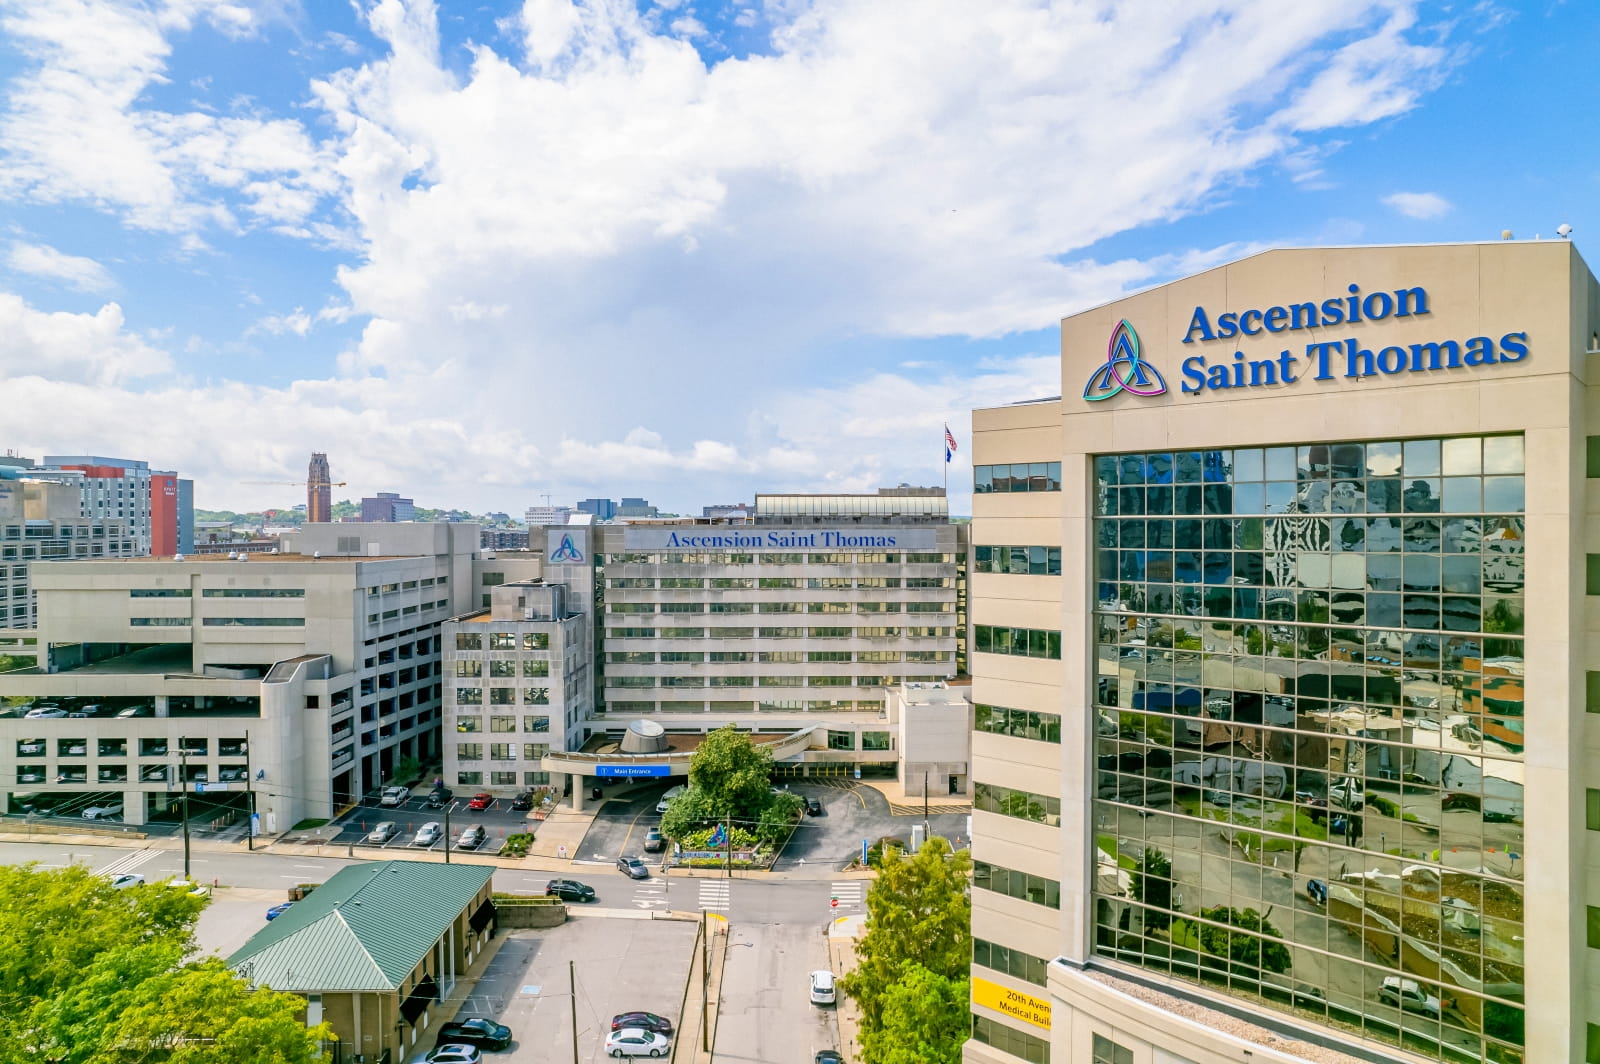 Saint Thomas Hospital